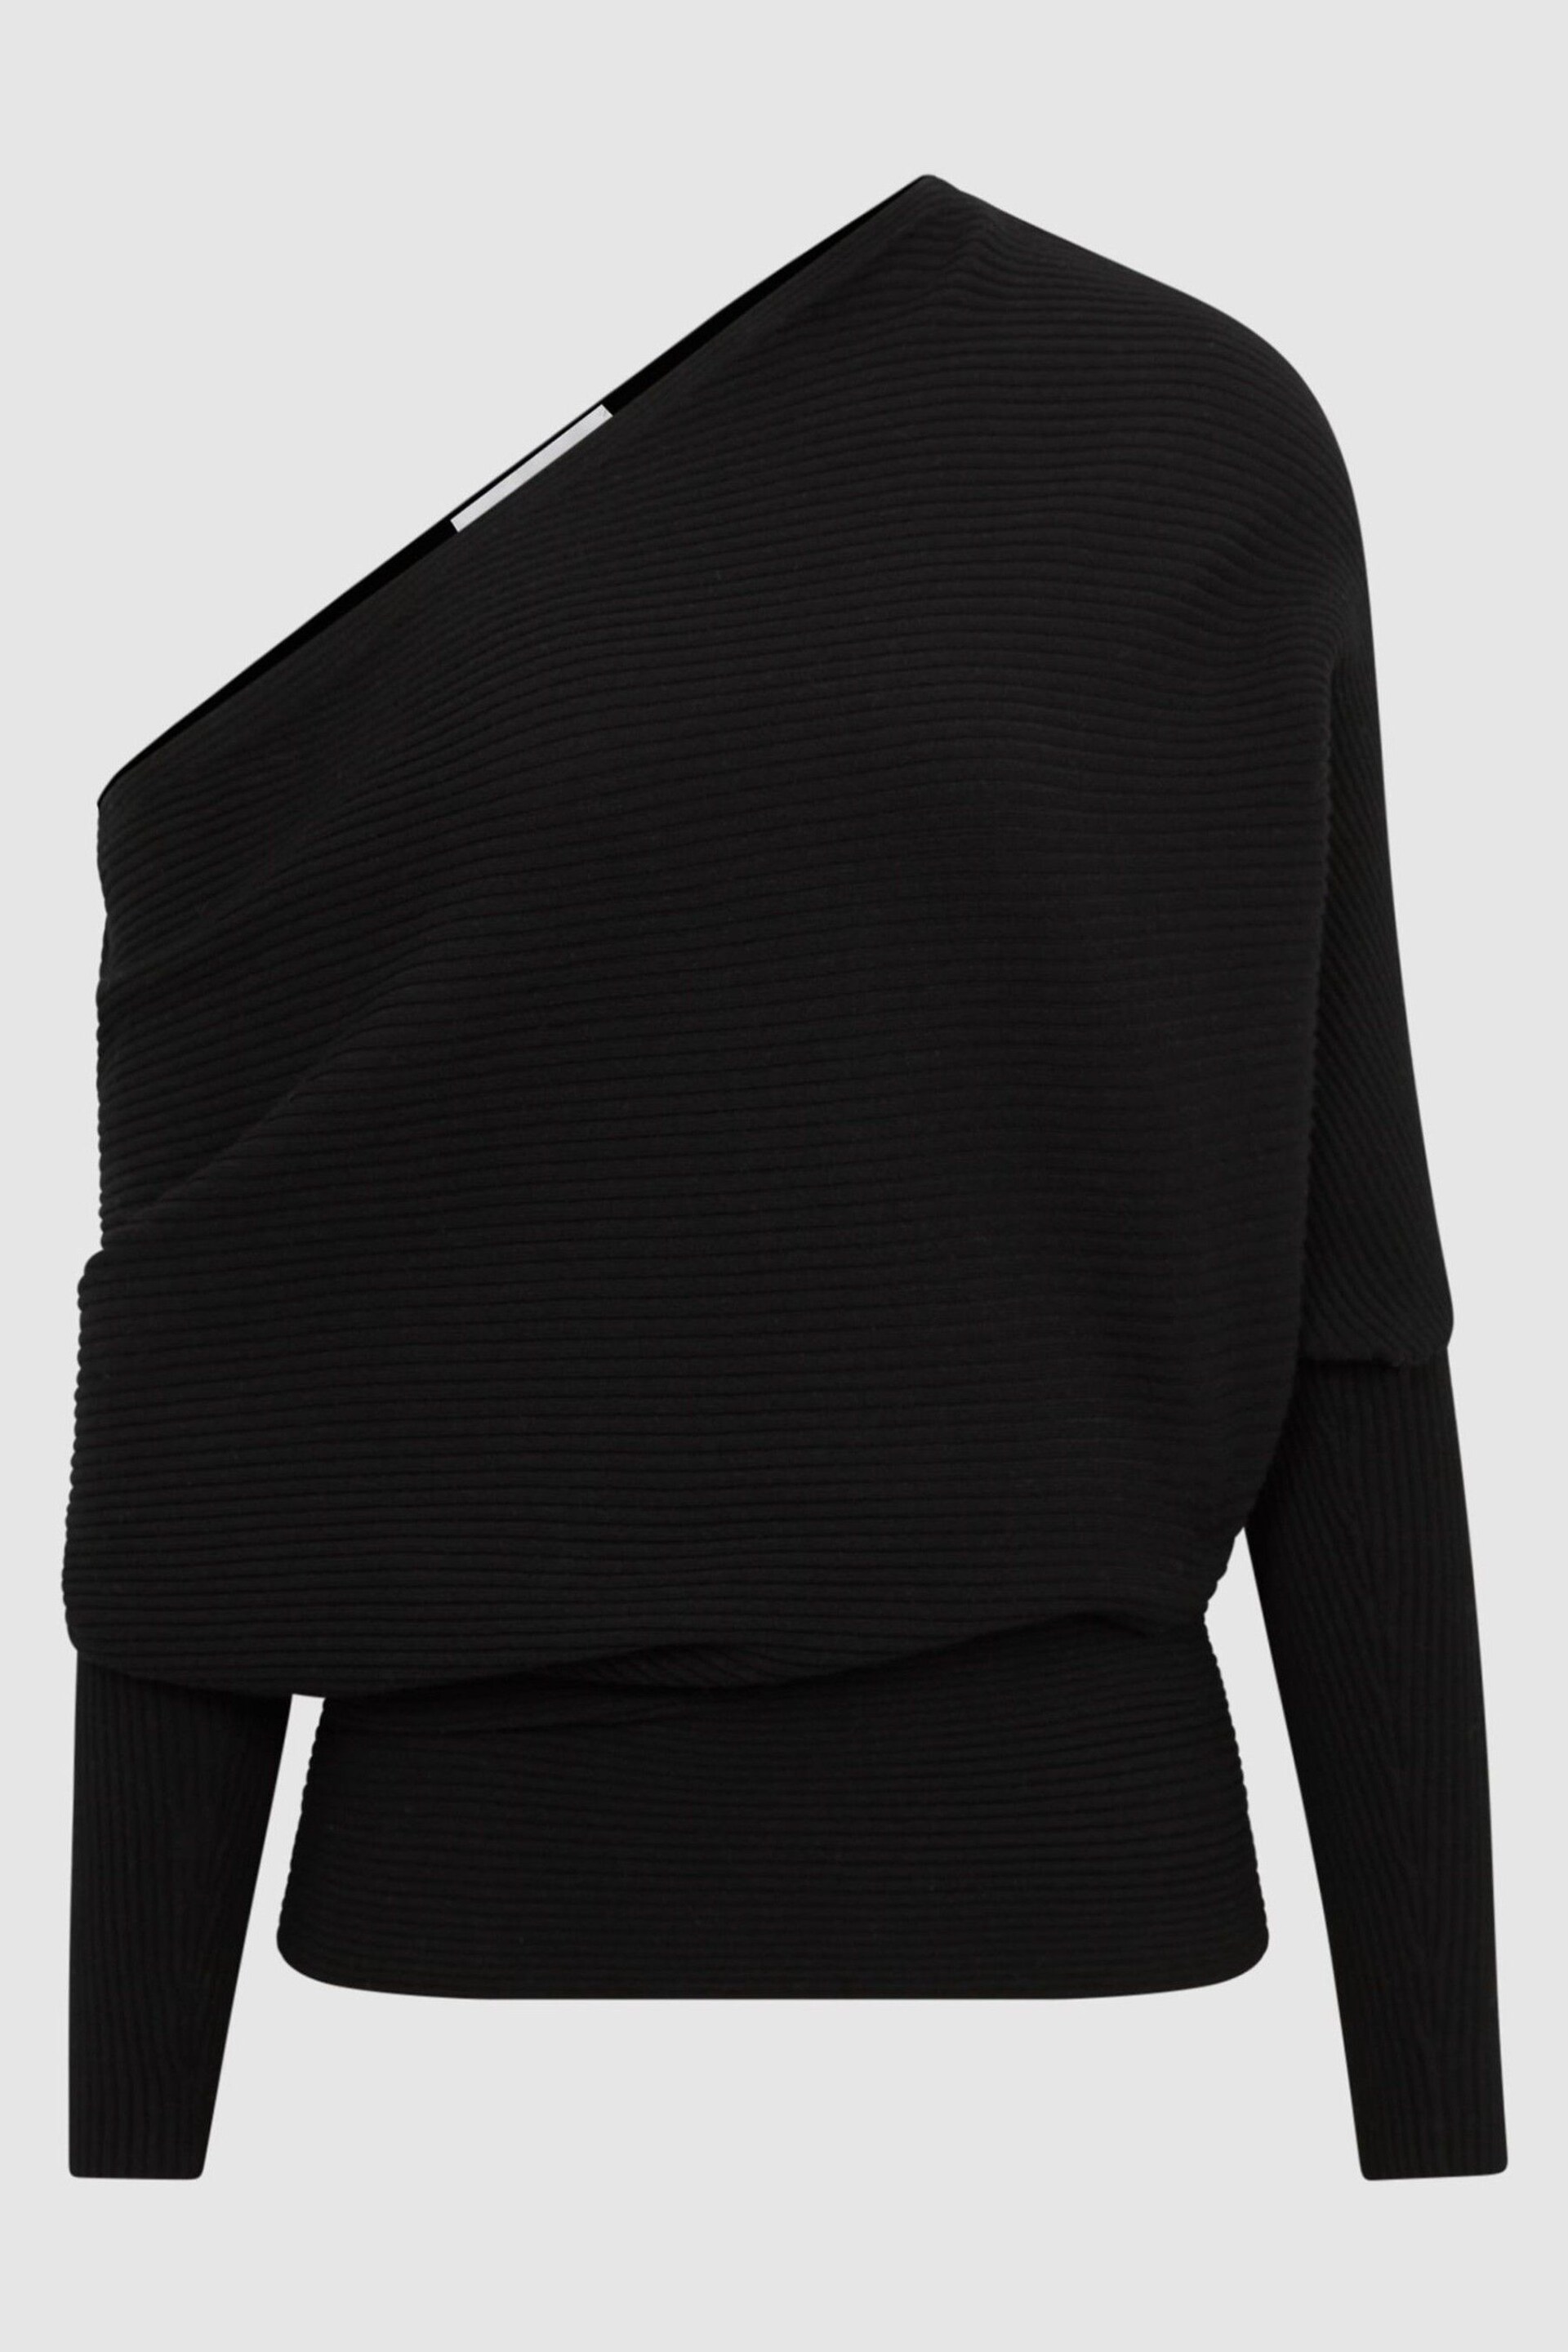 Reiss Black Lorna Asymmetric Drape Knitted Top - Image 2 of 5